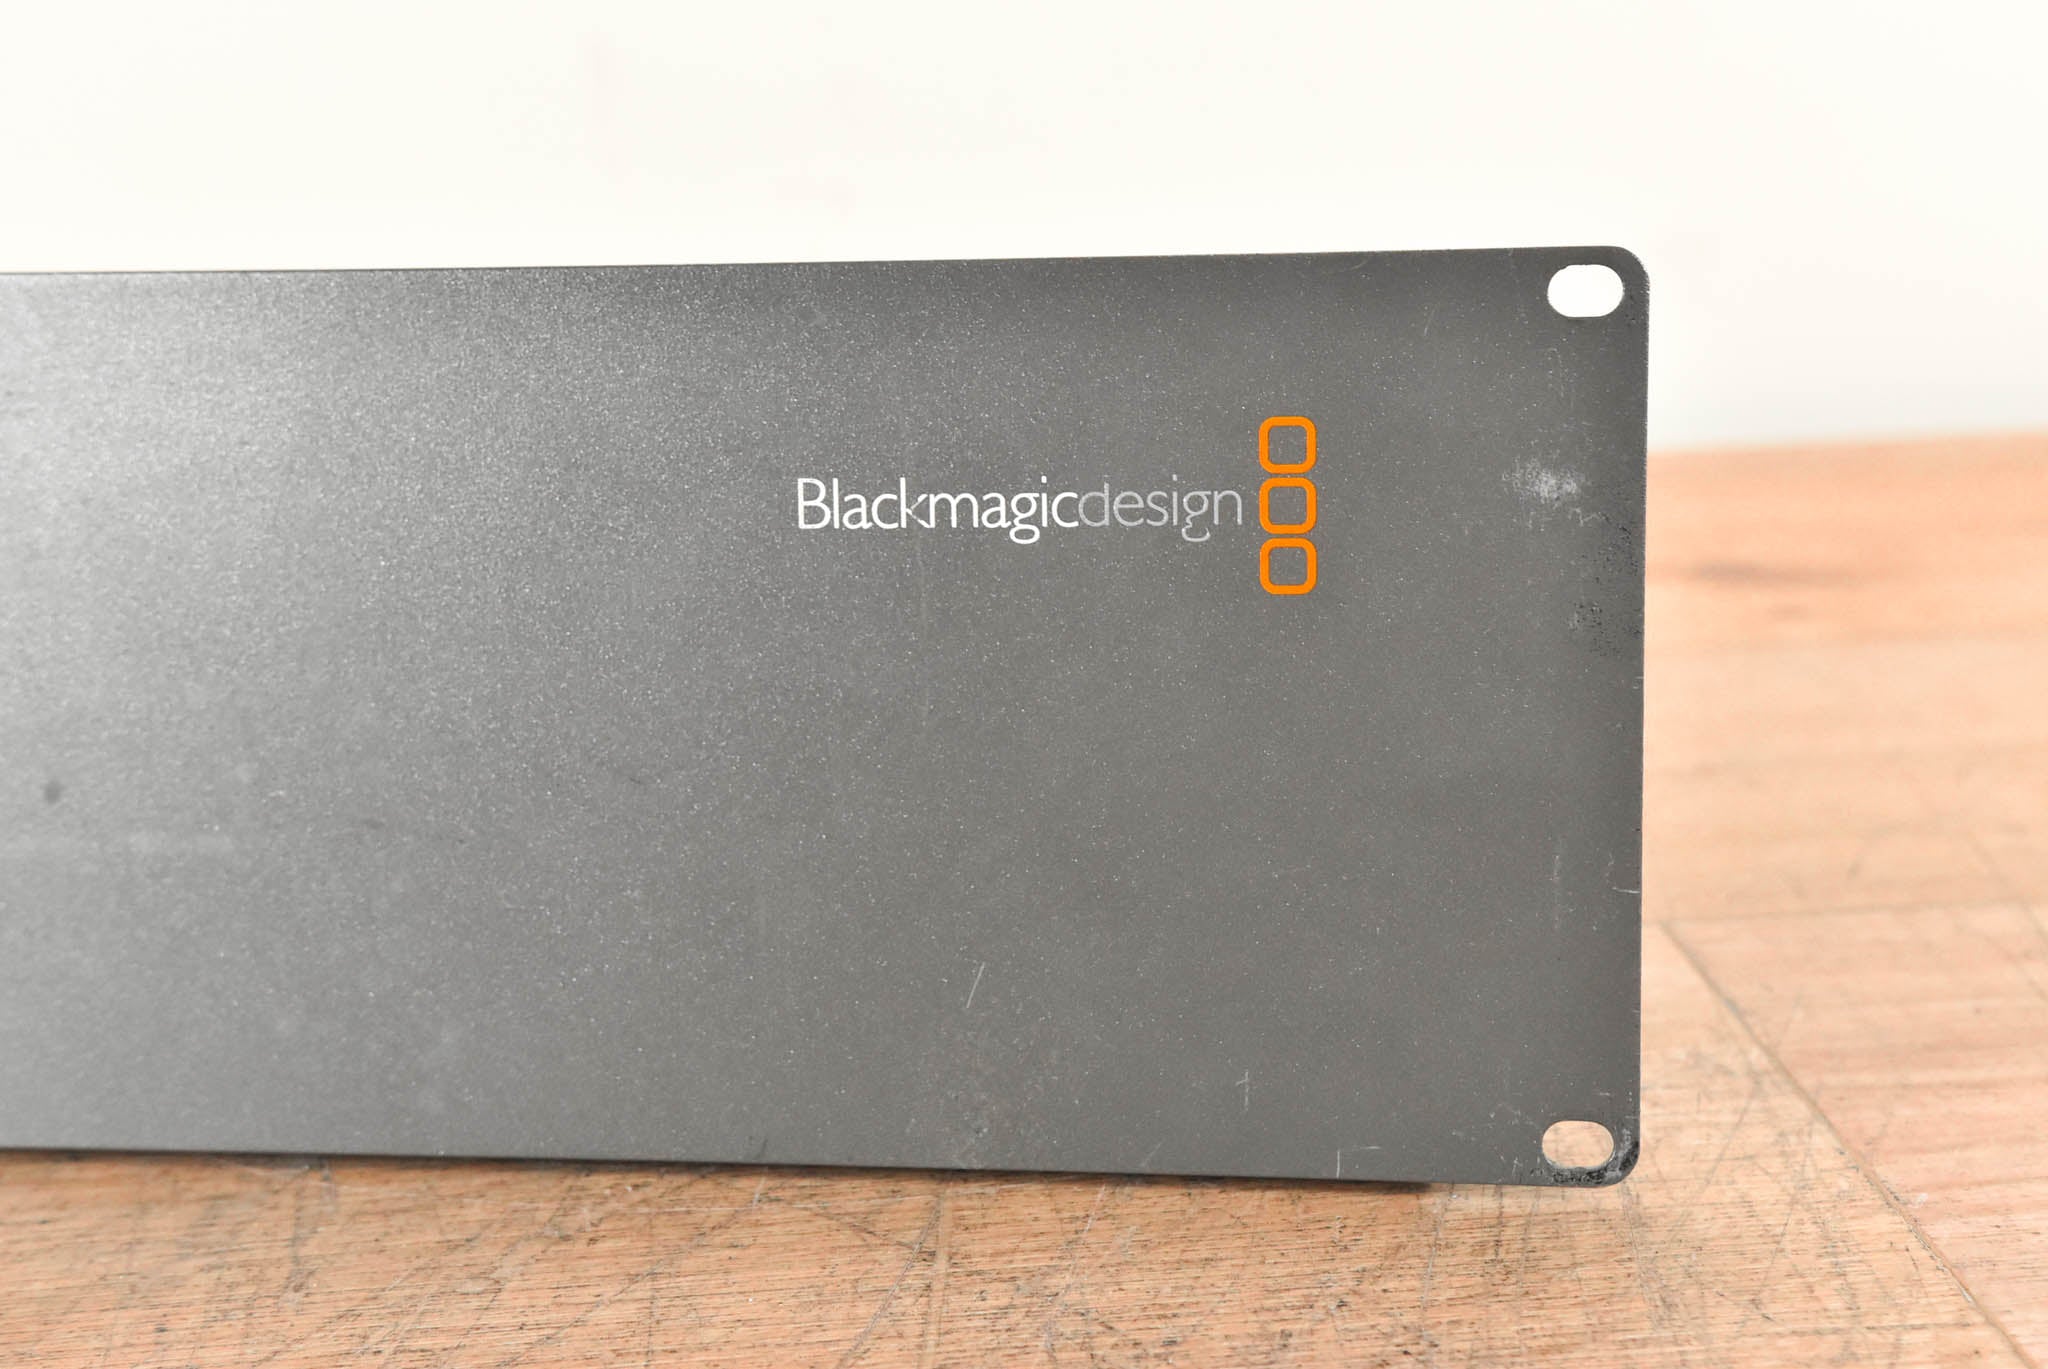 Blackmagic Design ATEM 2 M/E Production Switcher (NO POWER SUPPLY)